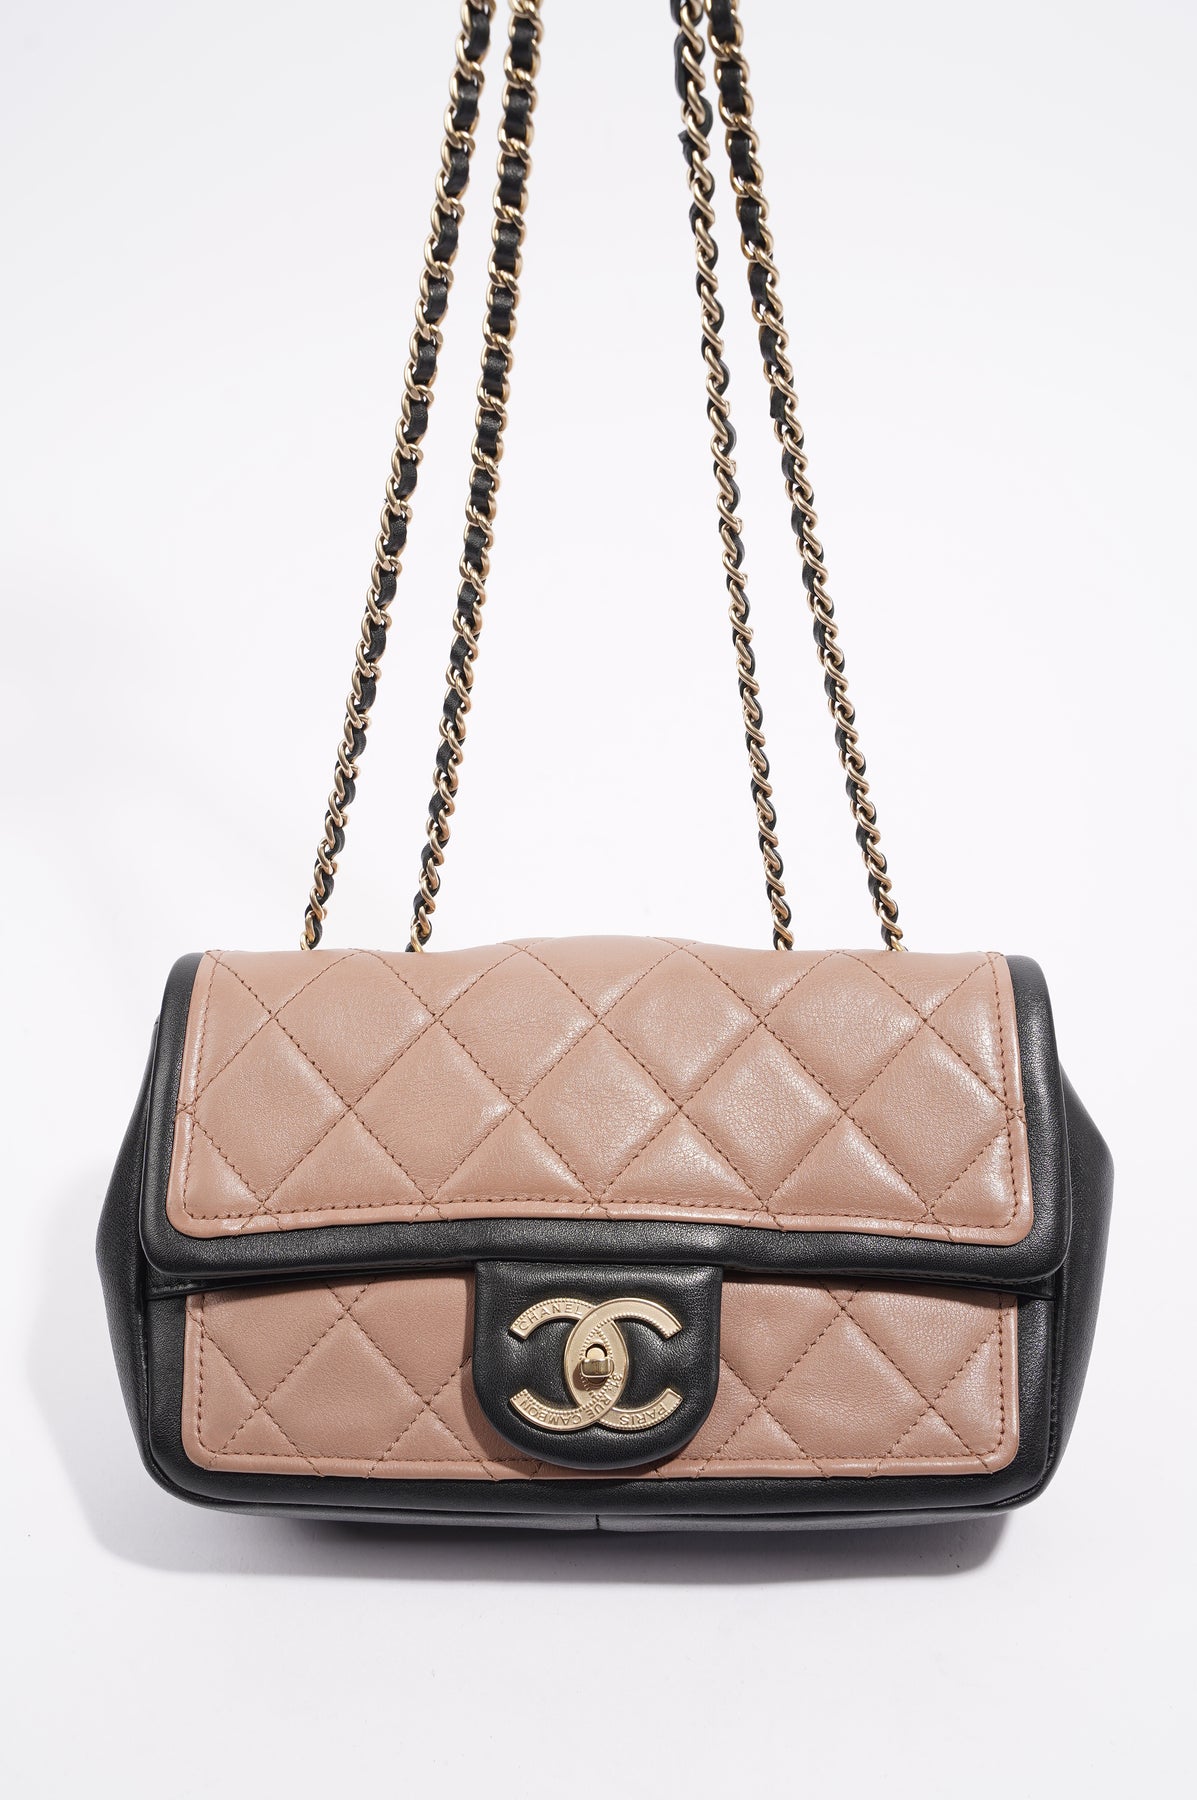 Chanel Maxi Classic Beige Lambskin Flap Bag Chanel | The Luxury Closet